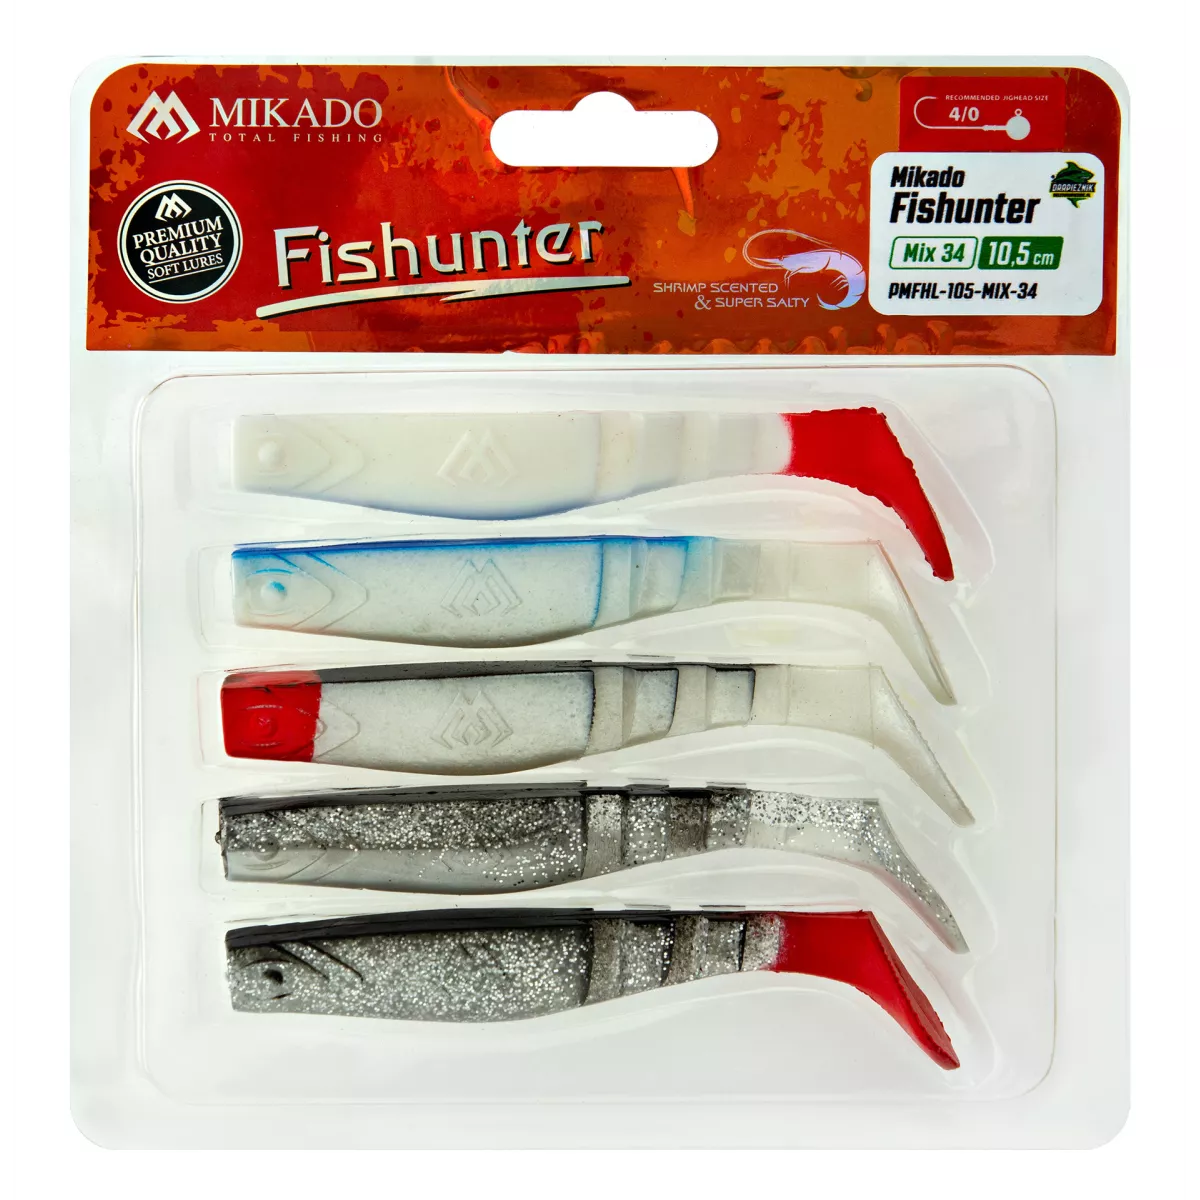 Zestaw gum Mikado Fishunter 10.5cm 5 szt. - MIX 34